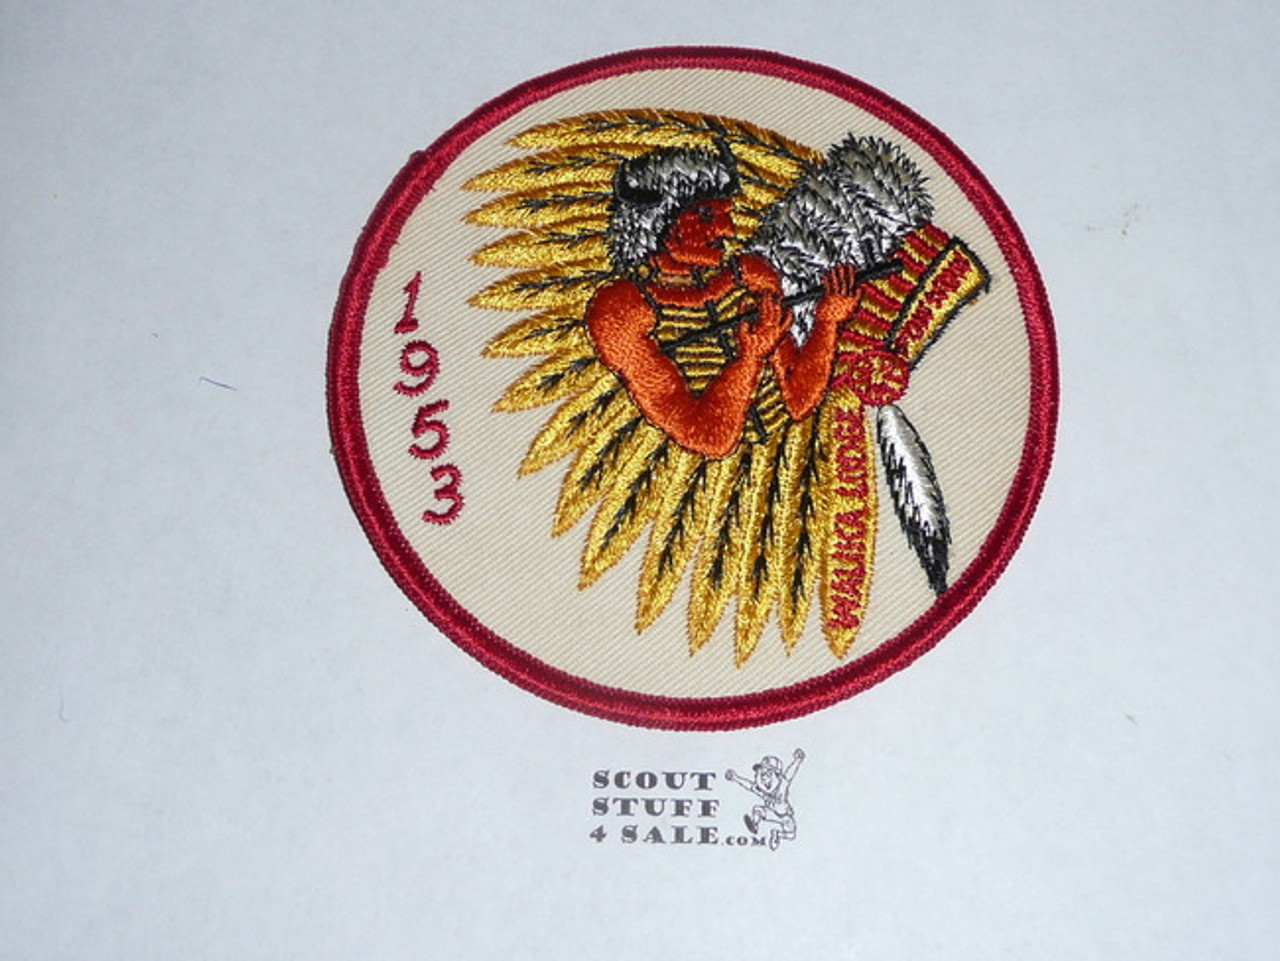 Order of the Arrow Lodge #228 Walika 1953 Pow Wow Patch, twill a bit yellowed